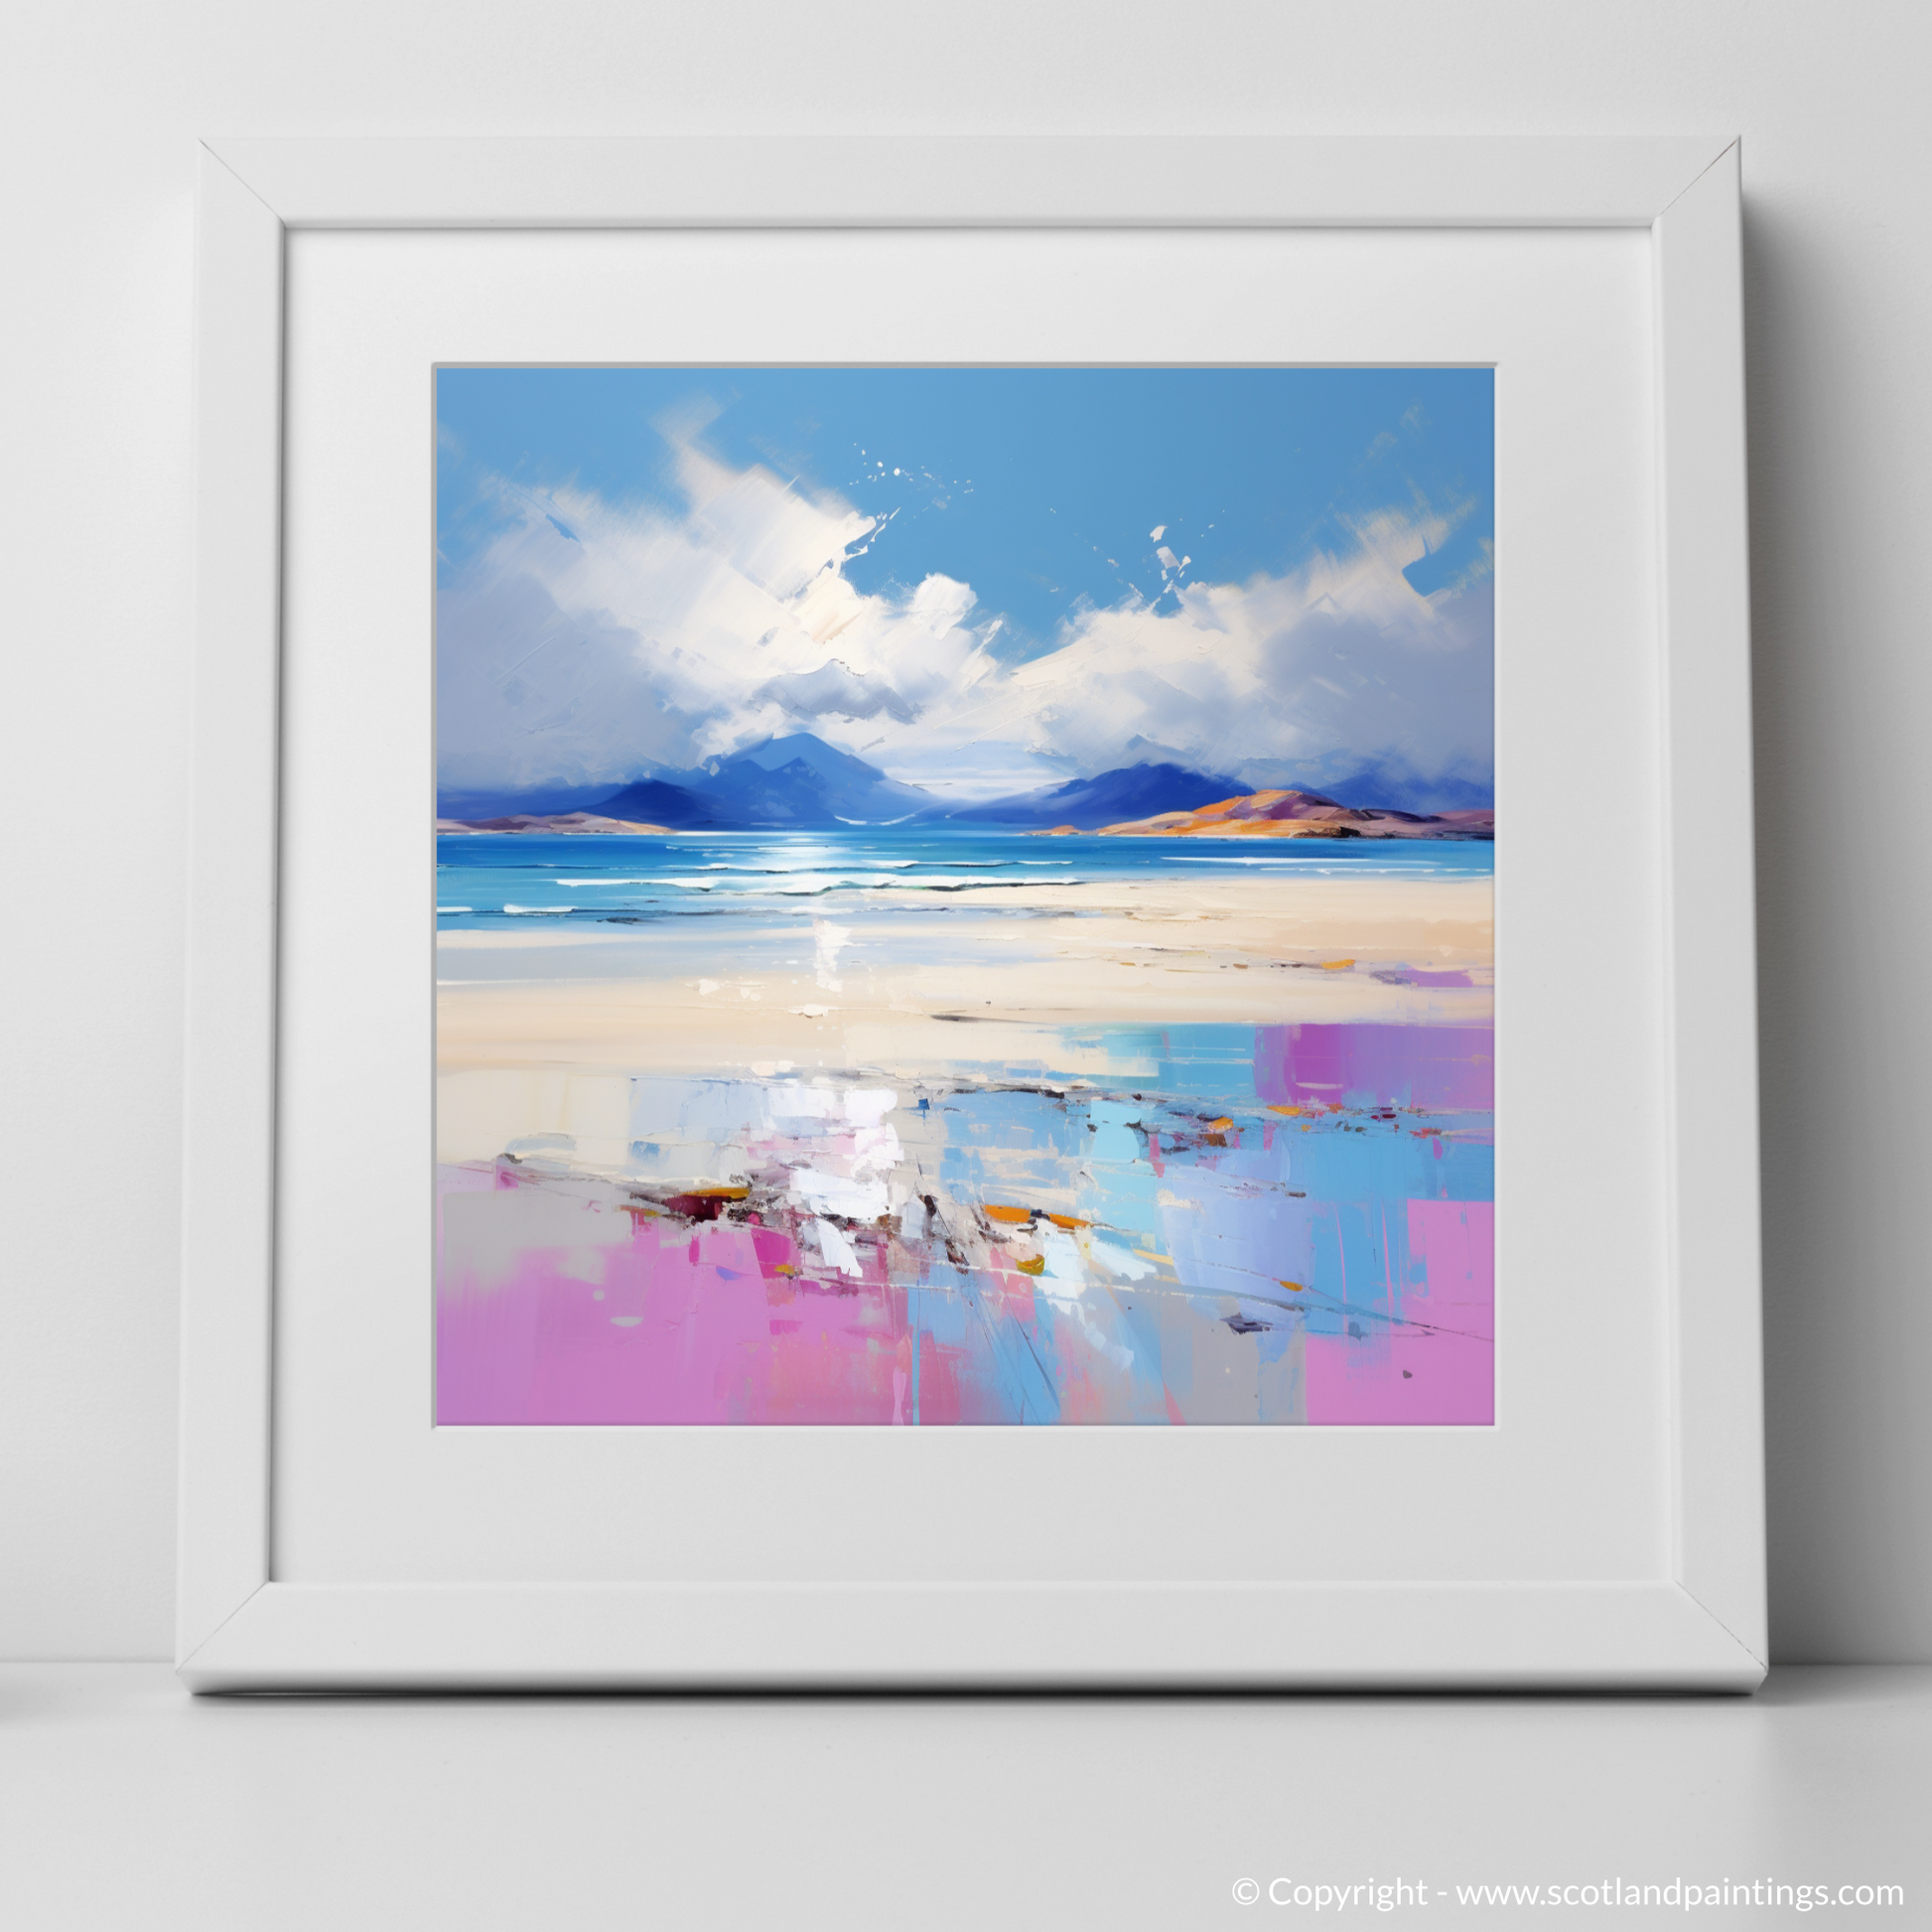 Art Print of Luskentyre Beach, Isle of Harris with a white frame